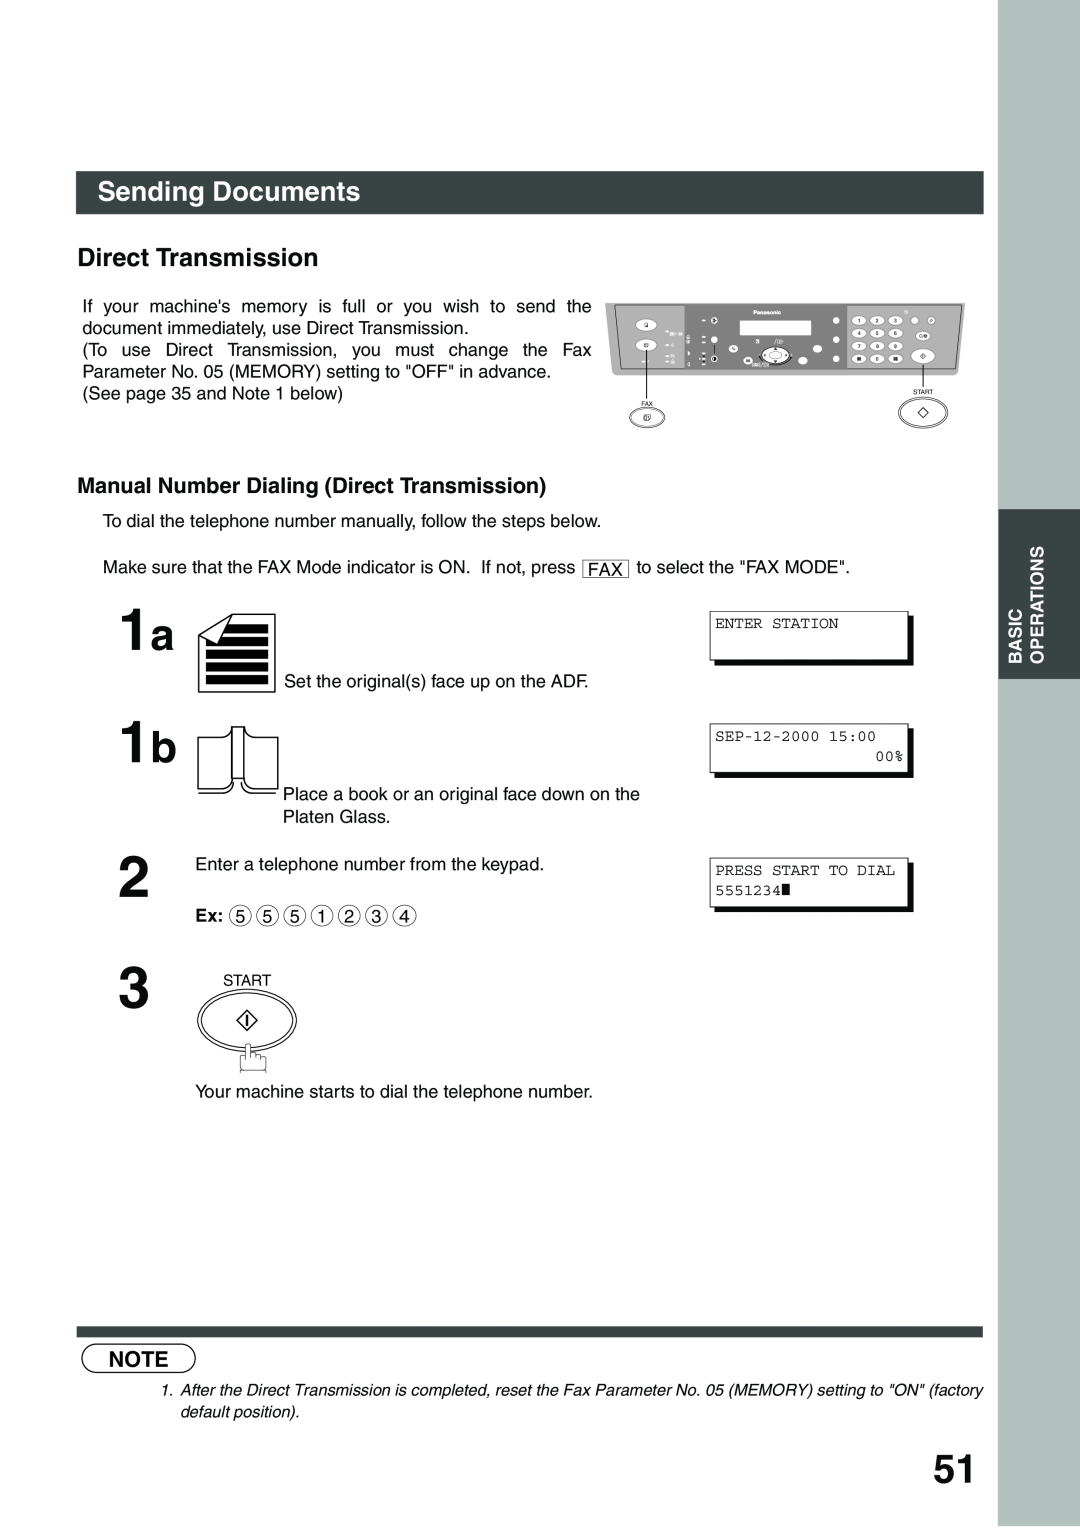 Panasonic DP-135FP appendix Manual Number Dialing Direct Transmission, Sending Documents 